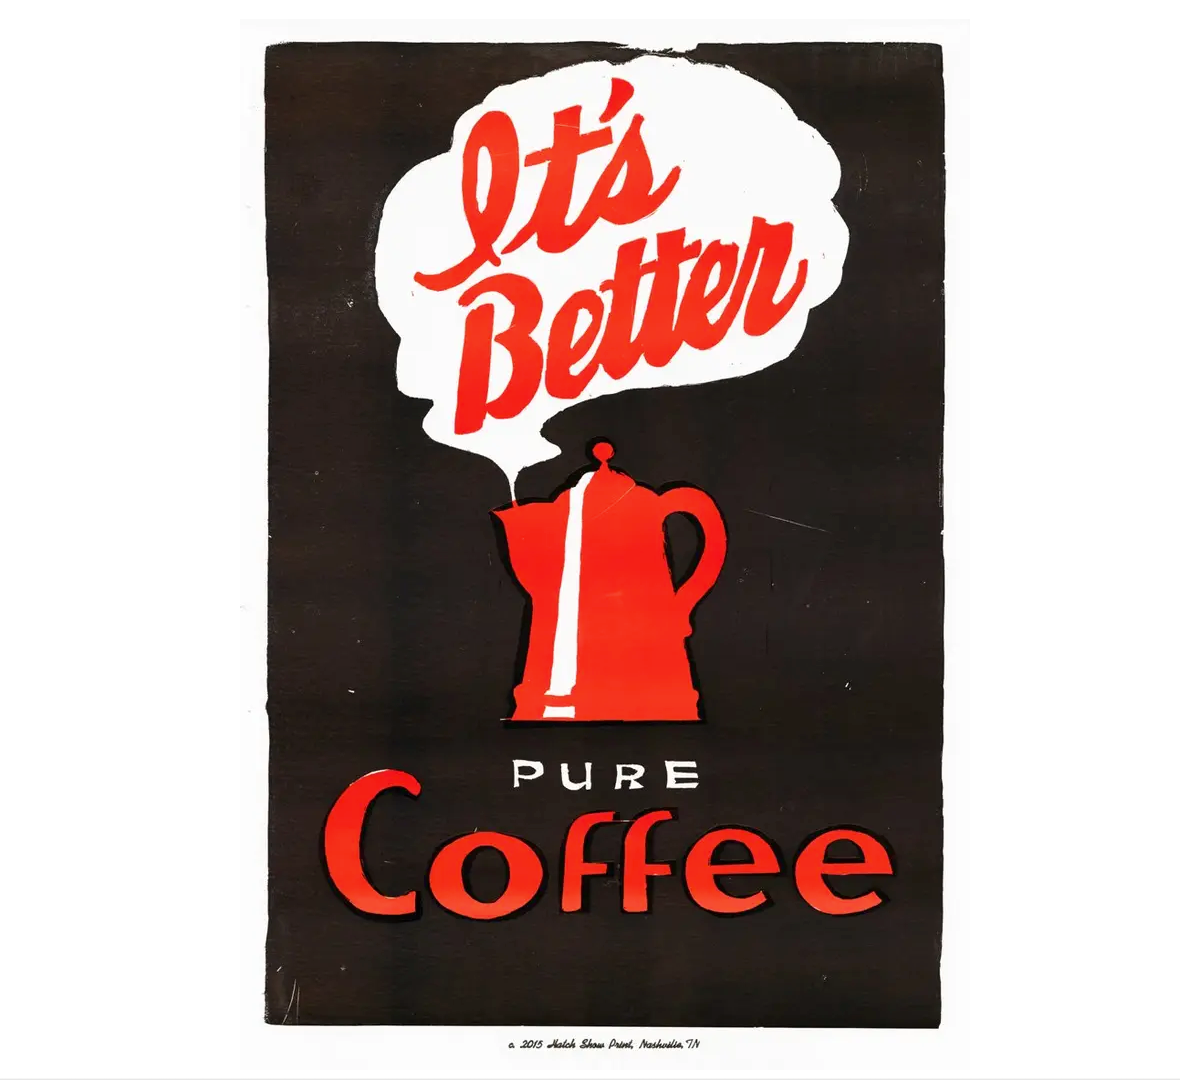 Pure Coffee, It's Better 14" x 20" Letterpress Print